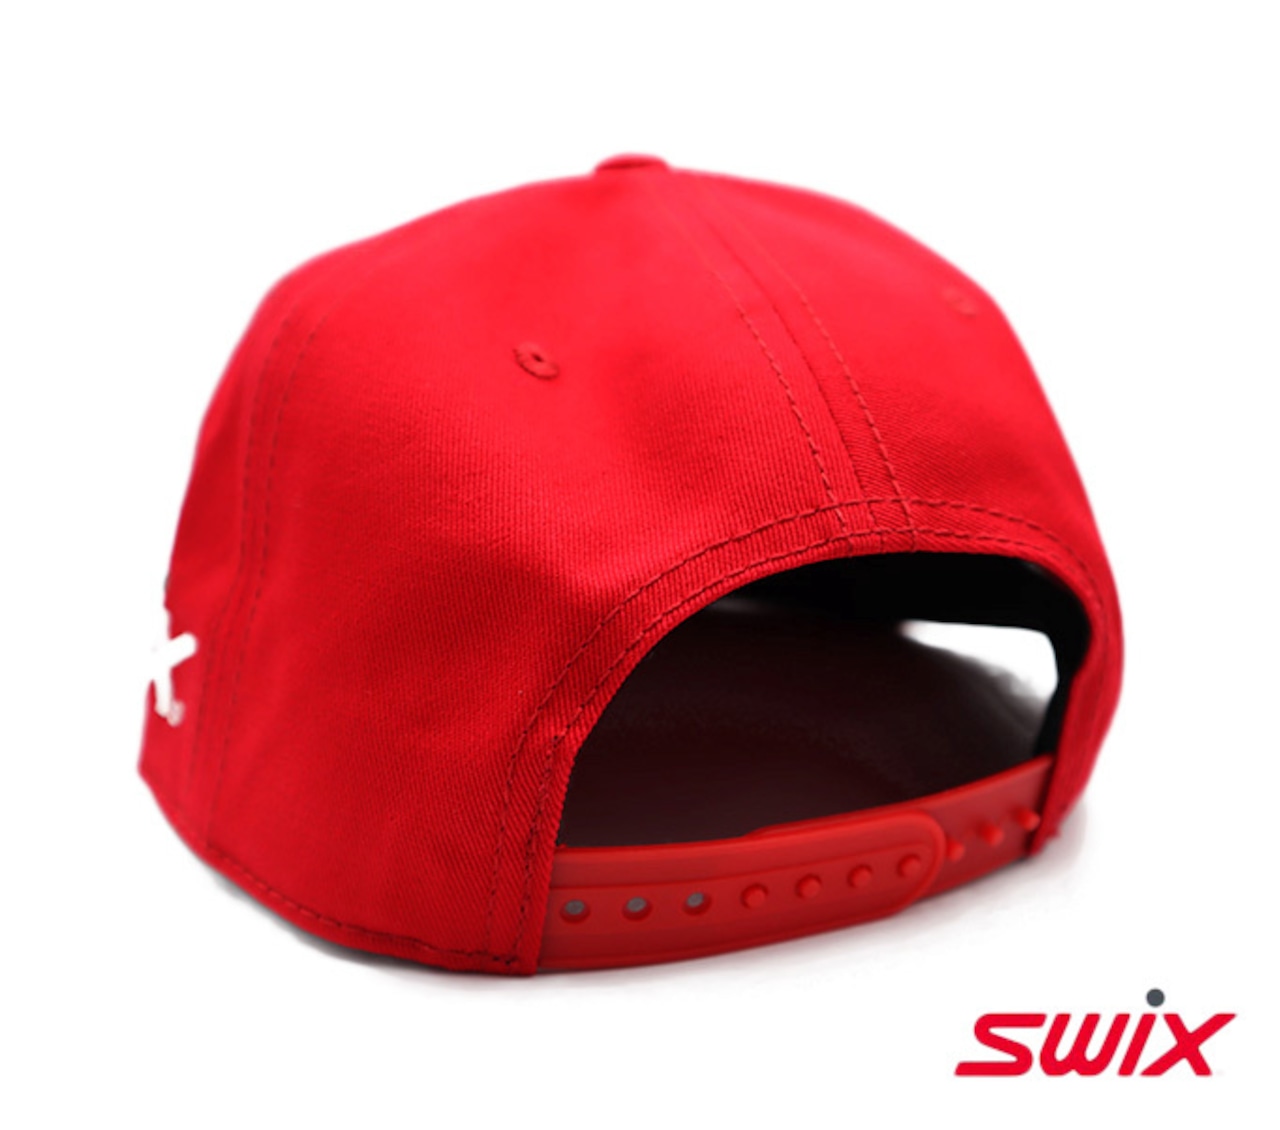 Swix スウィックス PRキャップ ブラック レッド 帽子 ベースボールキャップ PR18